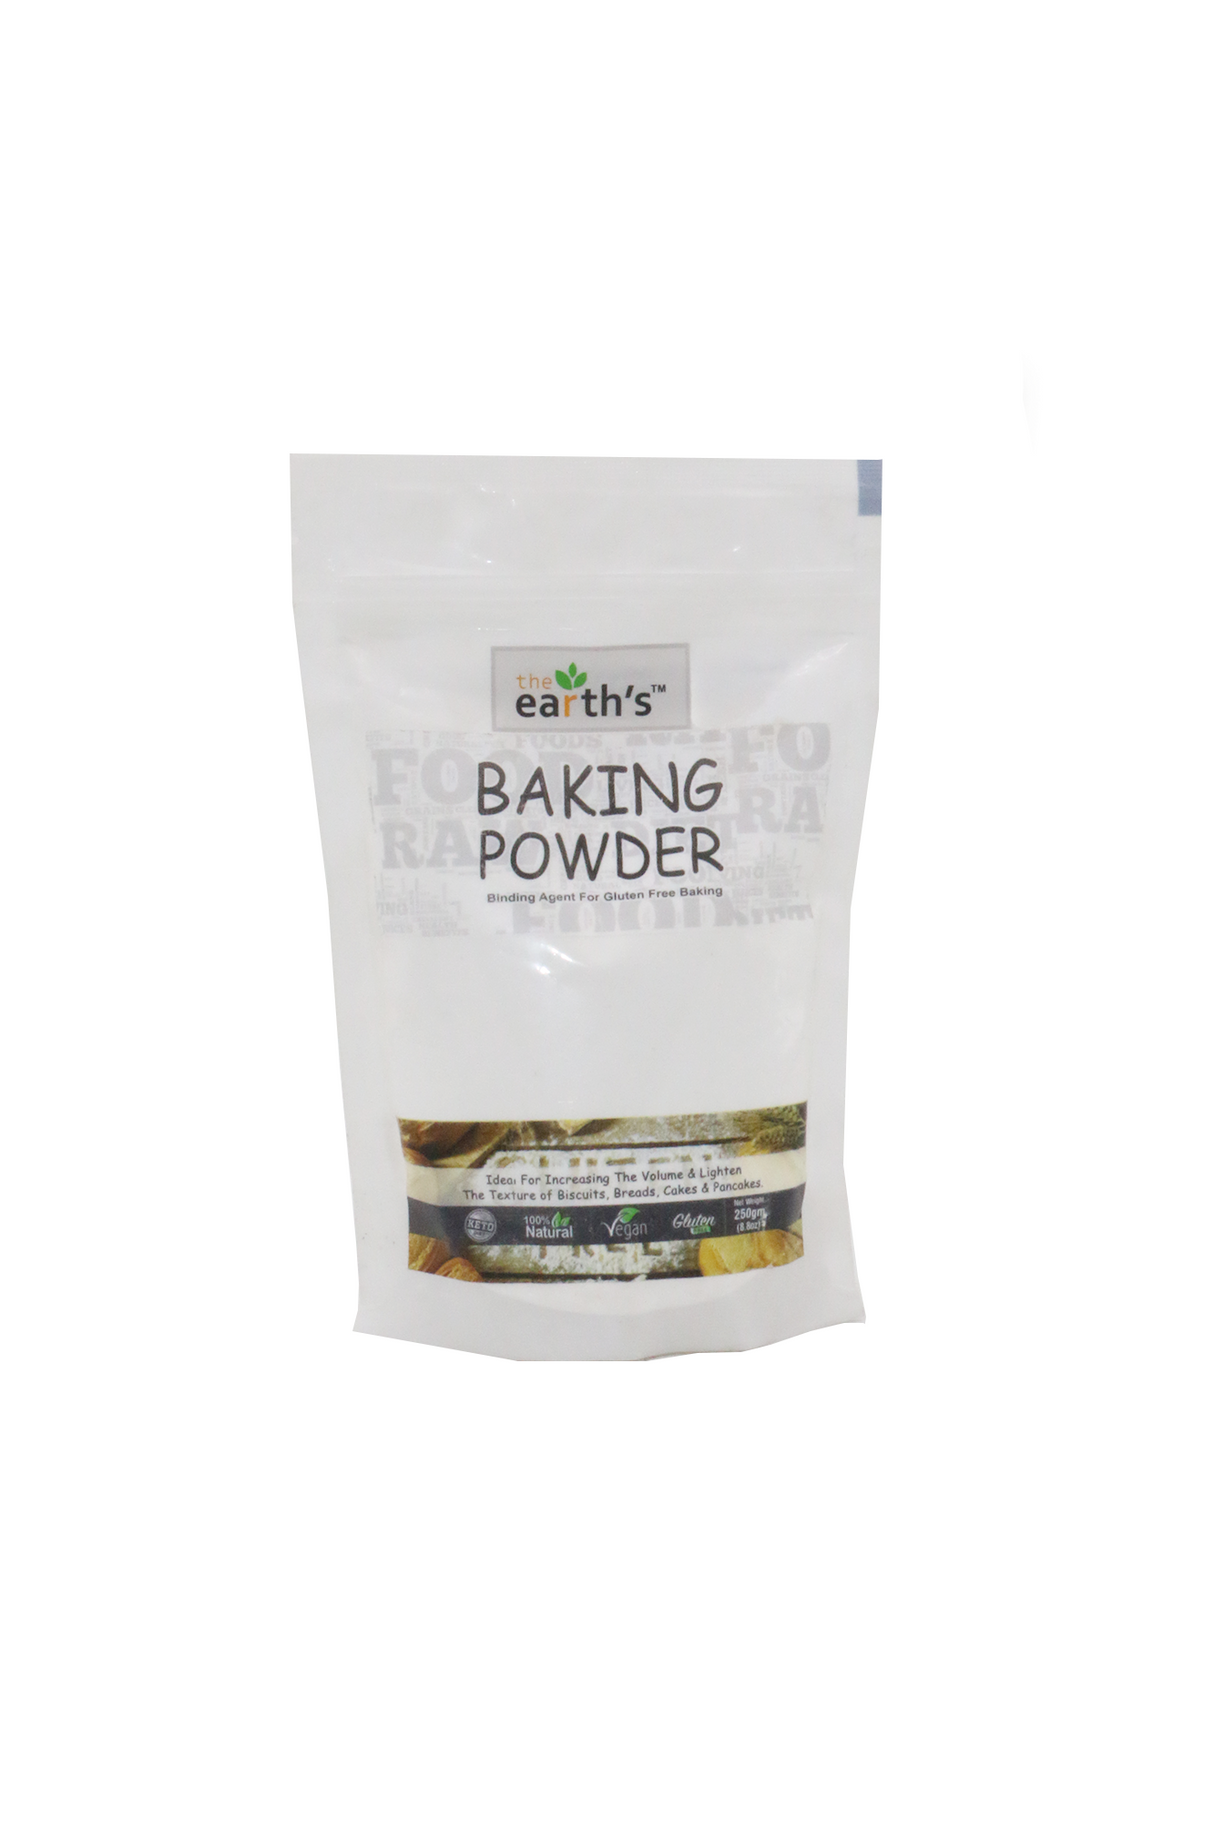 earths baking powder 250g